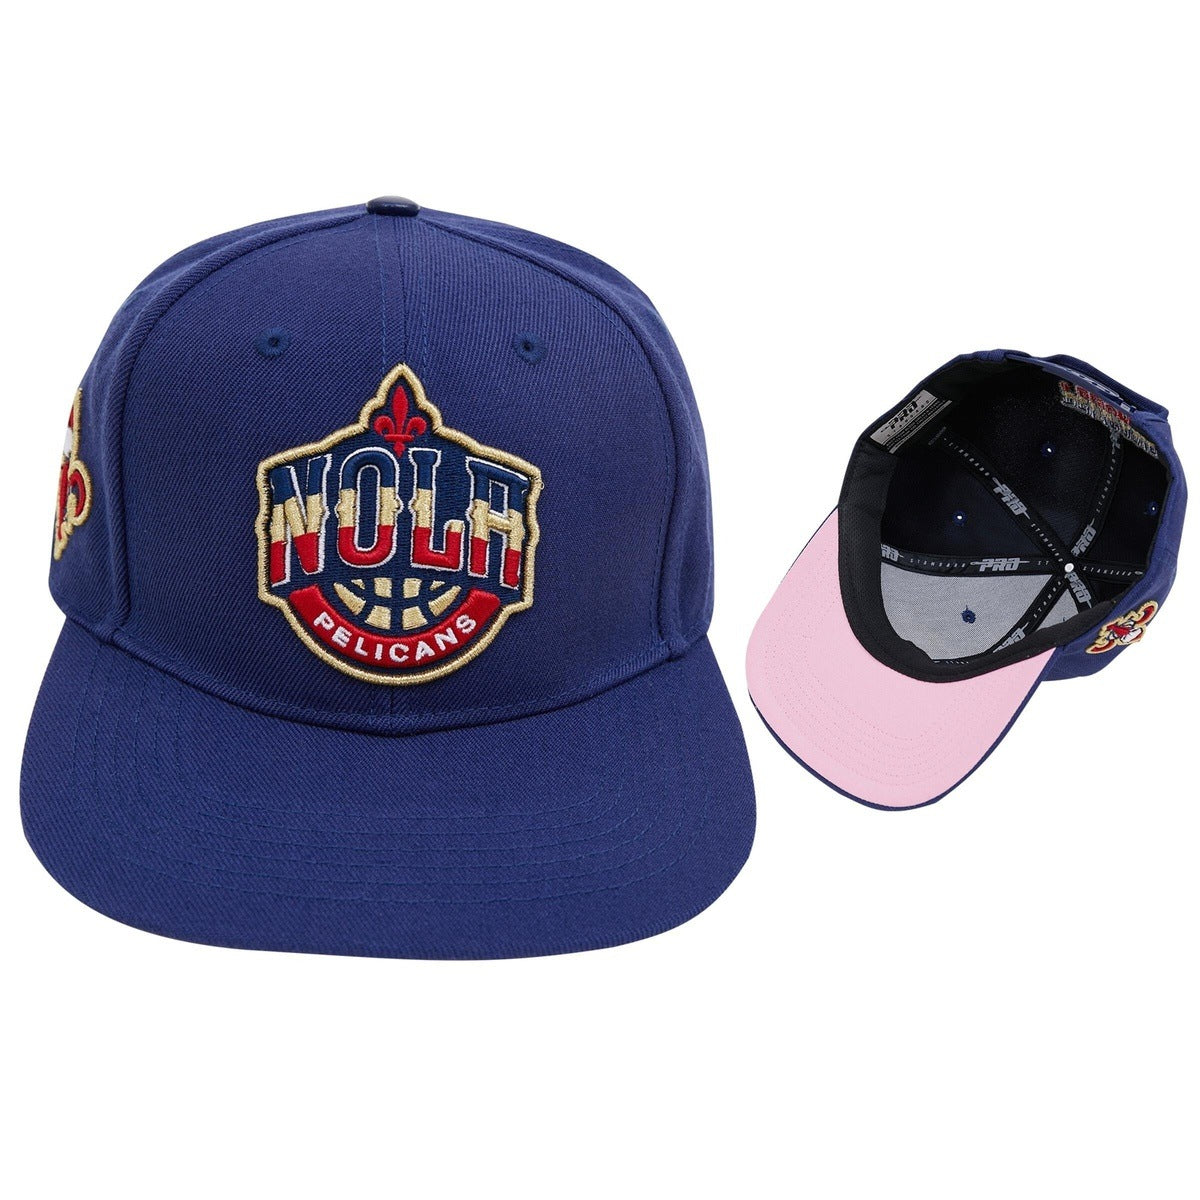 Pro Standard Unisex Atlanta Braves Snapback Hat in Navy